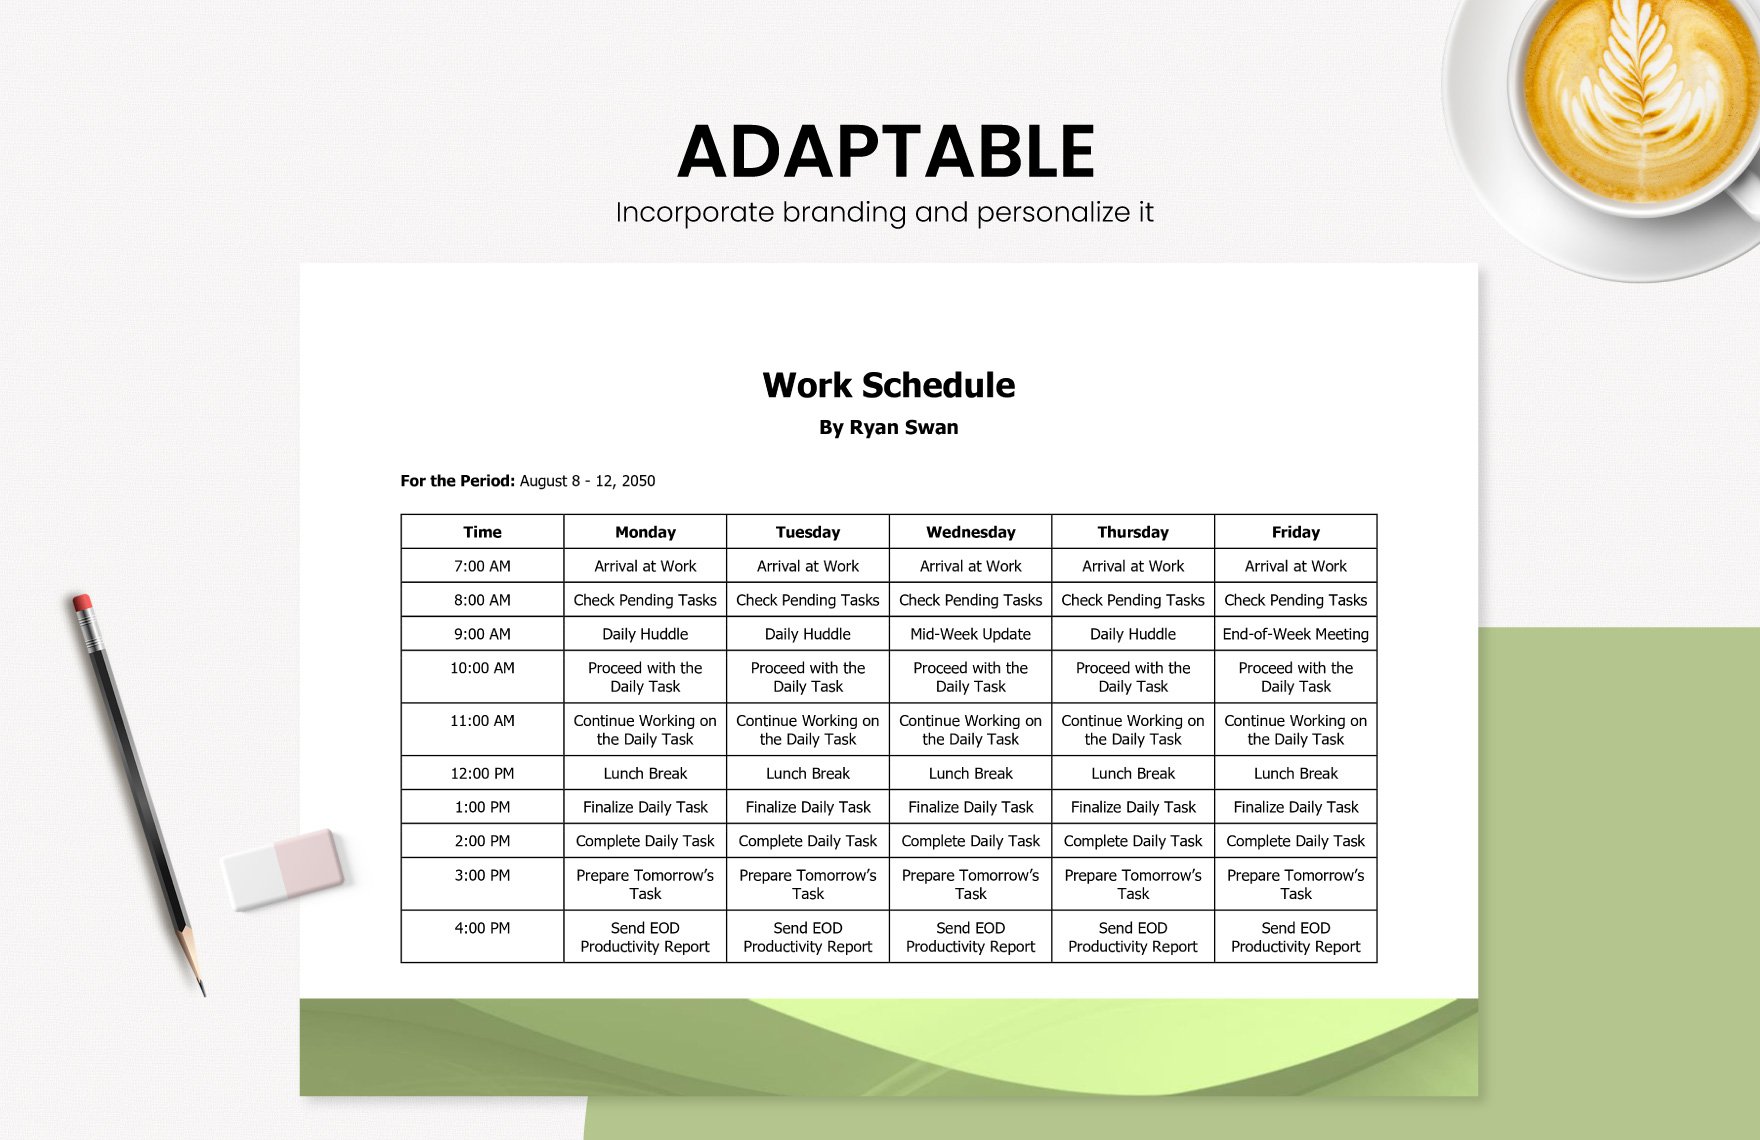 Sample Work Schedule Template